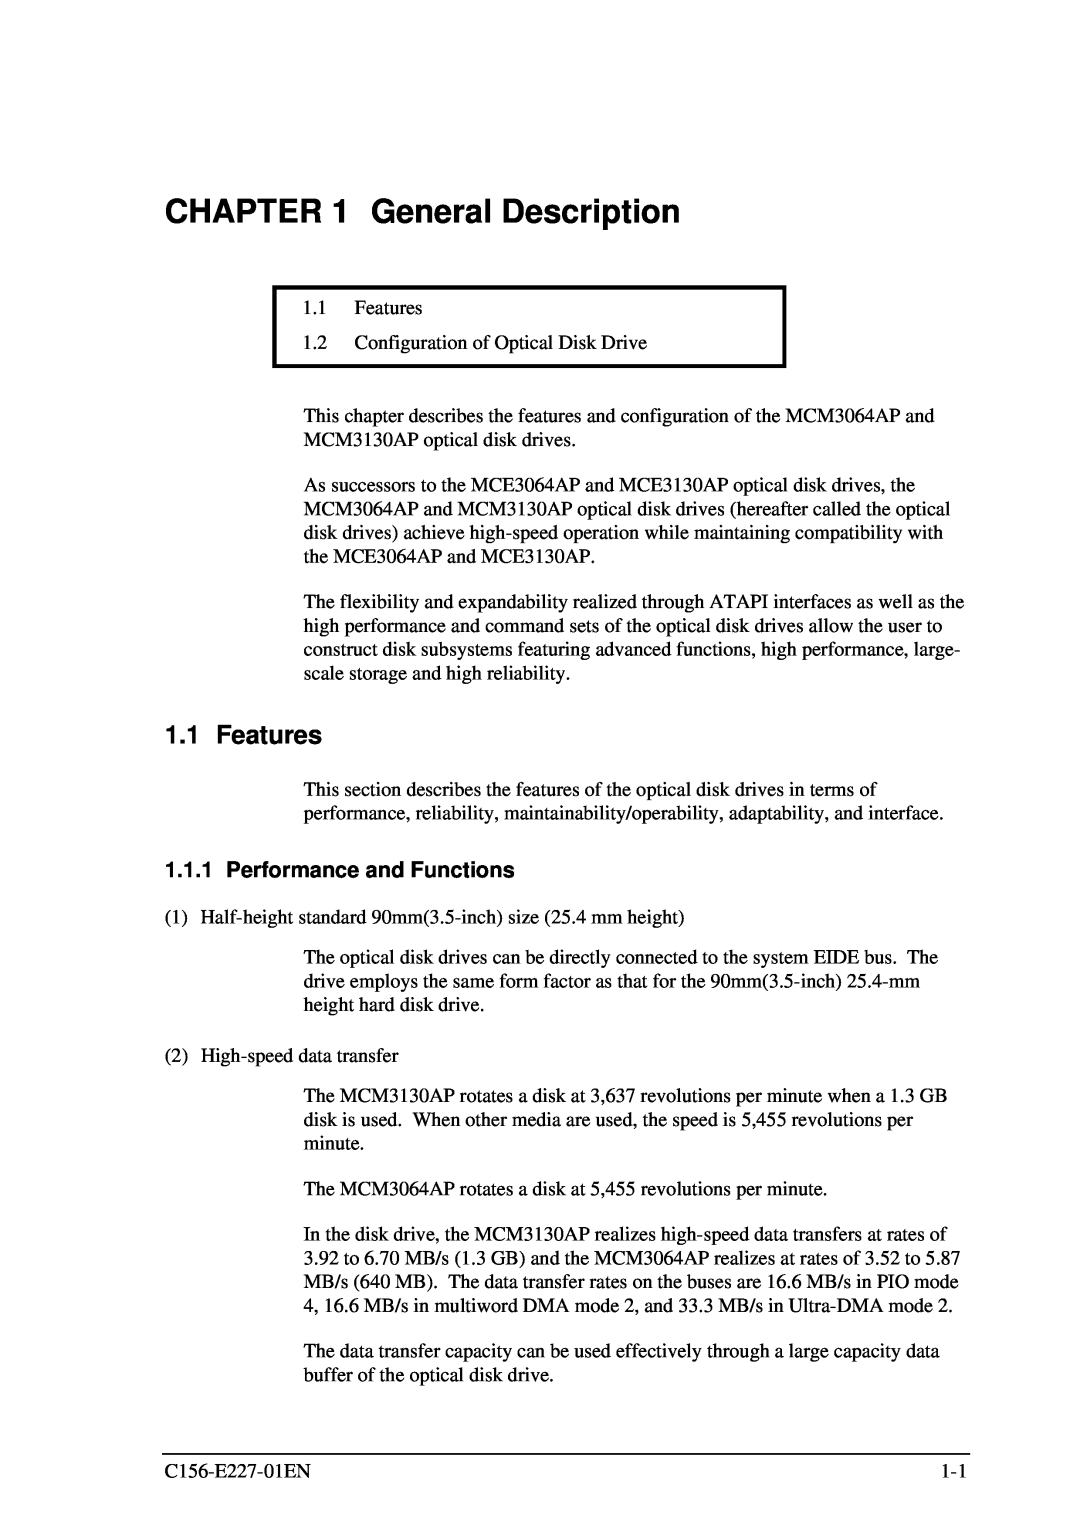 Fujitsu MCM3130AP, MCM3064AP manual General Description, Features, Performance and Functions 